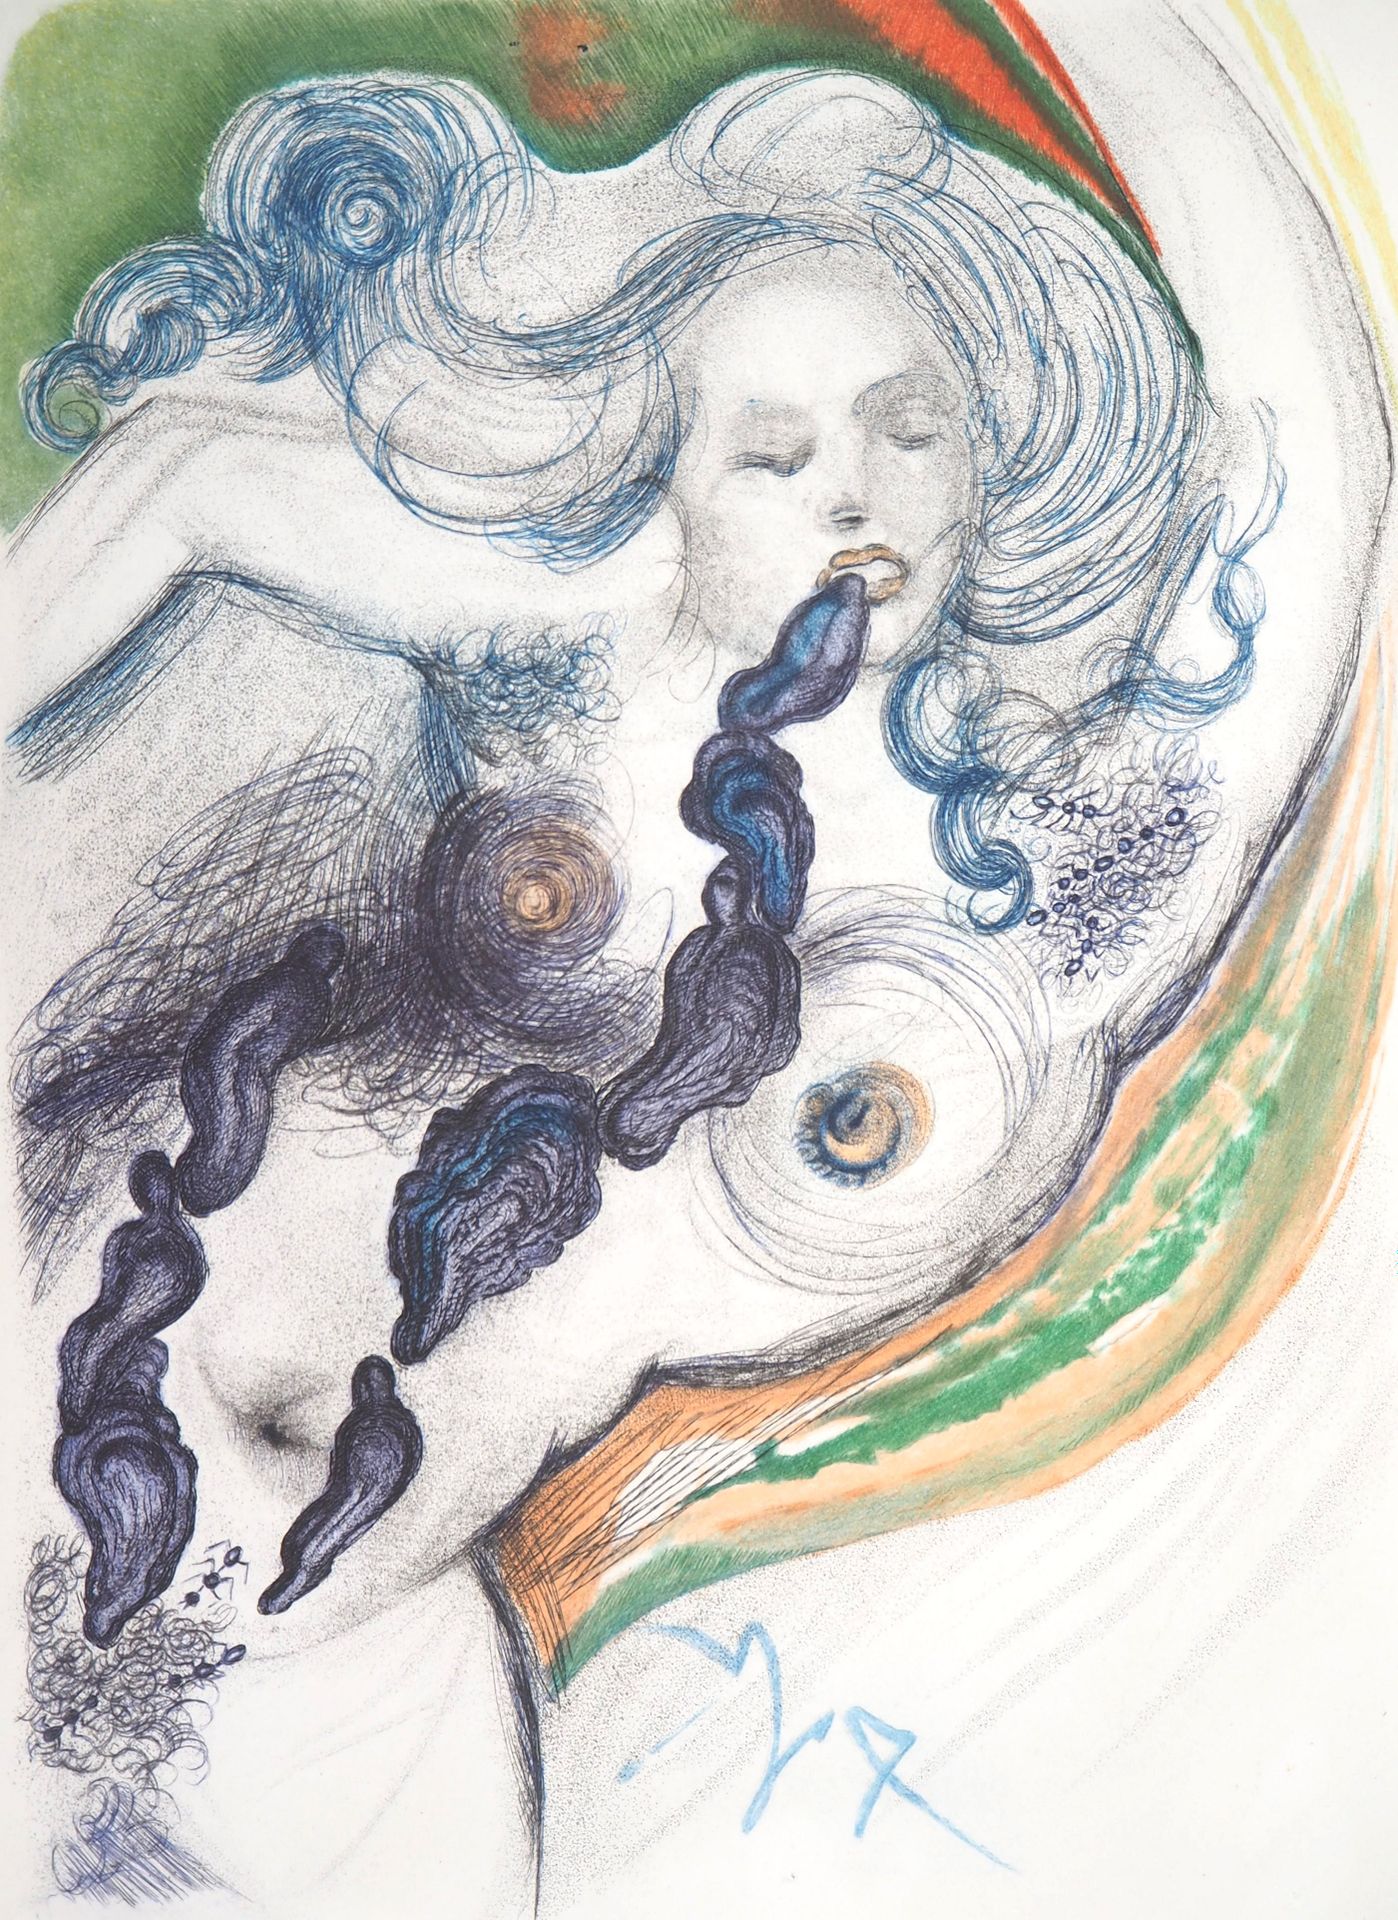 Salvador DALI 萨尔瓦多-达利 (1904-1989)

卡萨诺瓦：春药牡蛎和裸体，1967年

原创蚀刻版画（点状印刷的日光凹版画）

板块中的签&hellip;